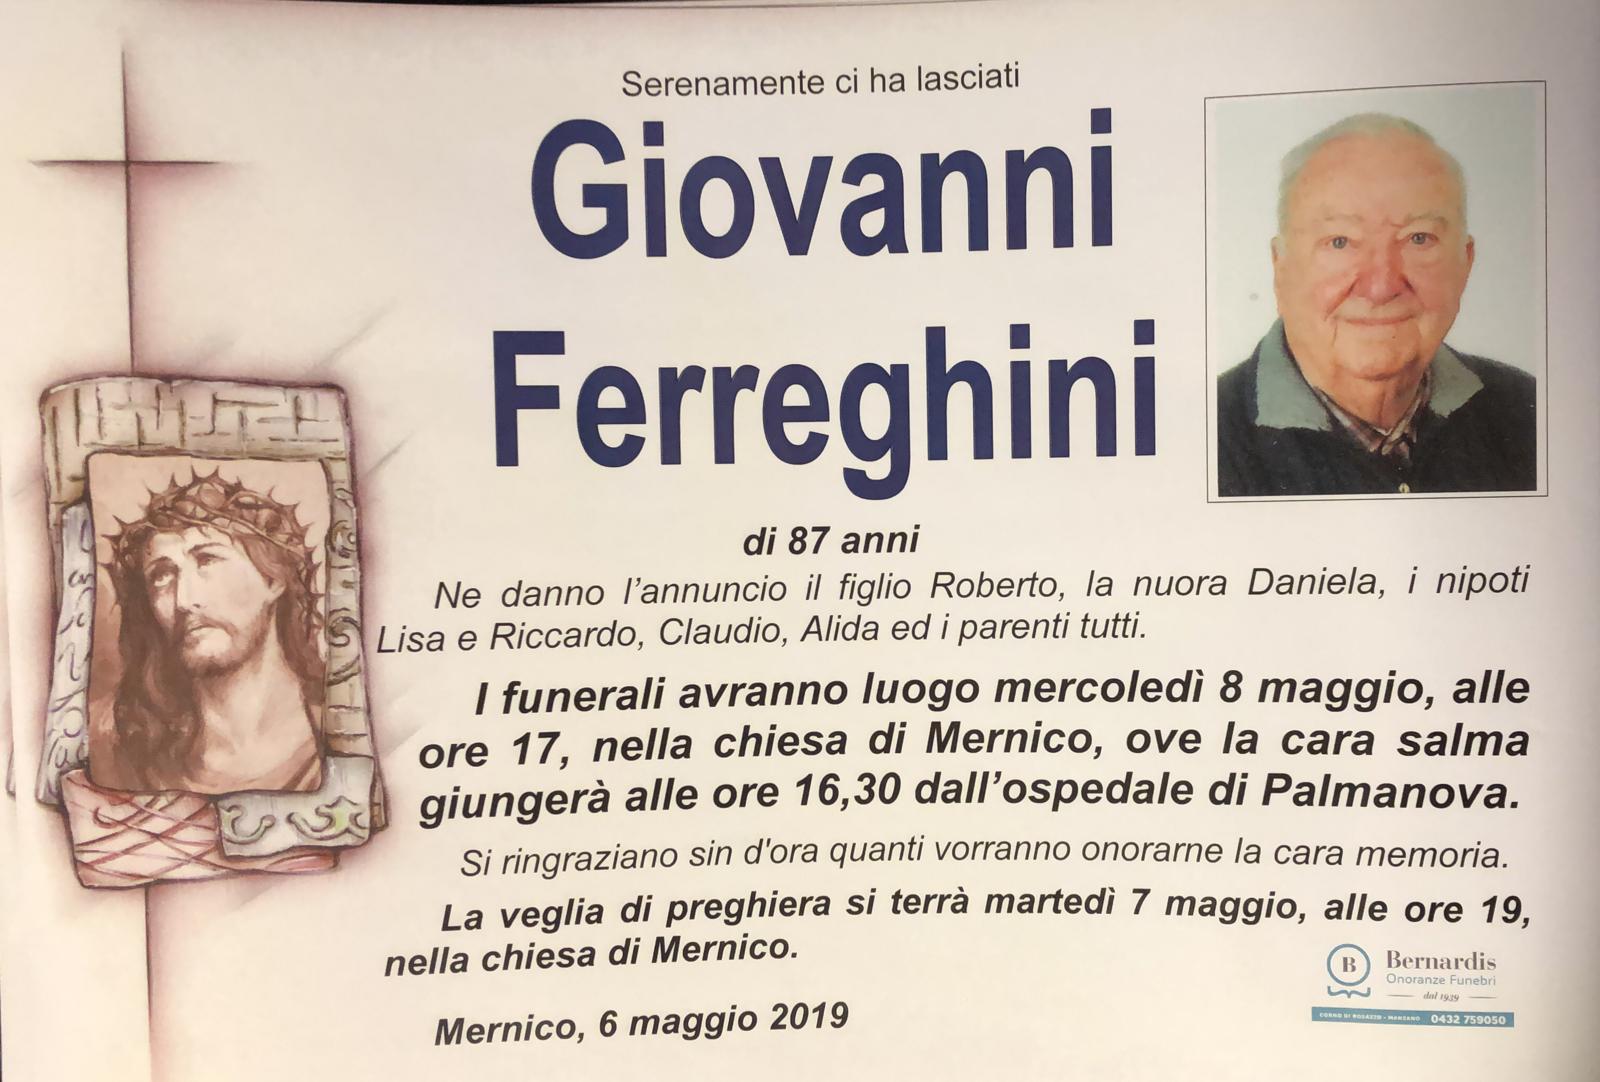 Giovanni Ferreghini